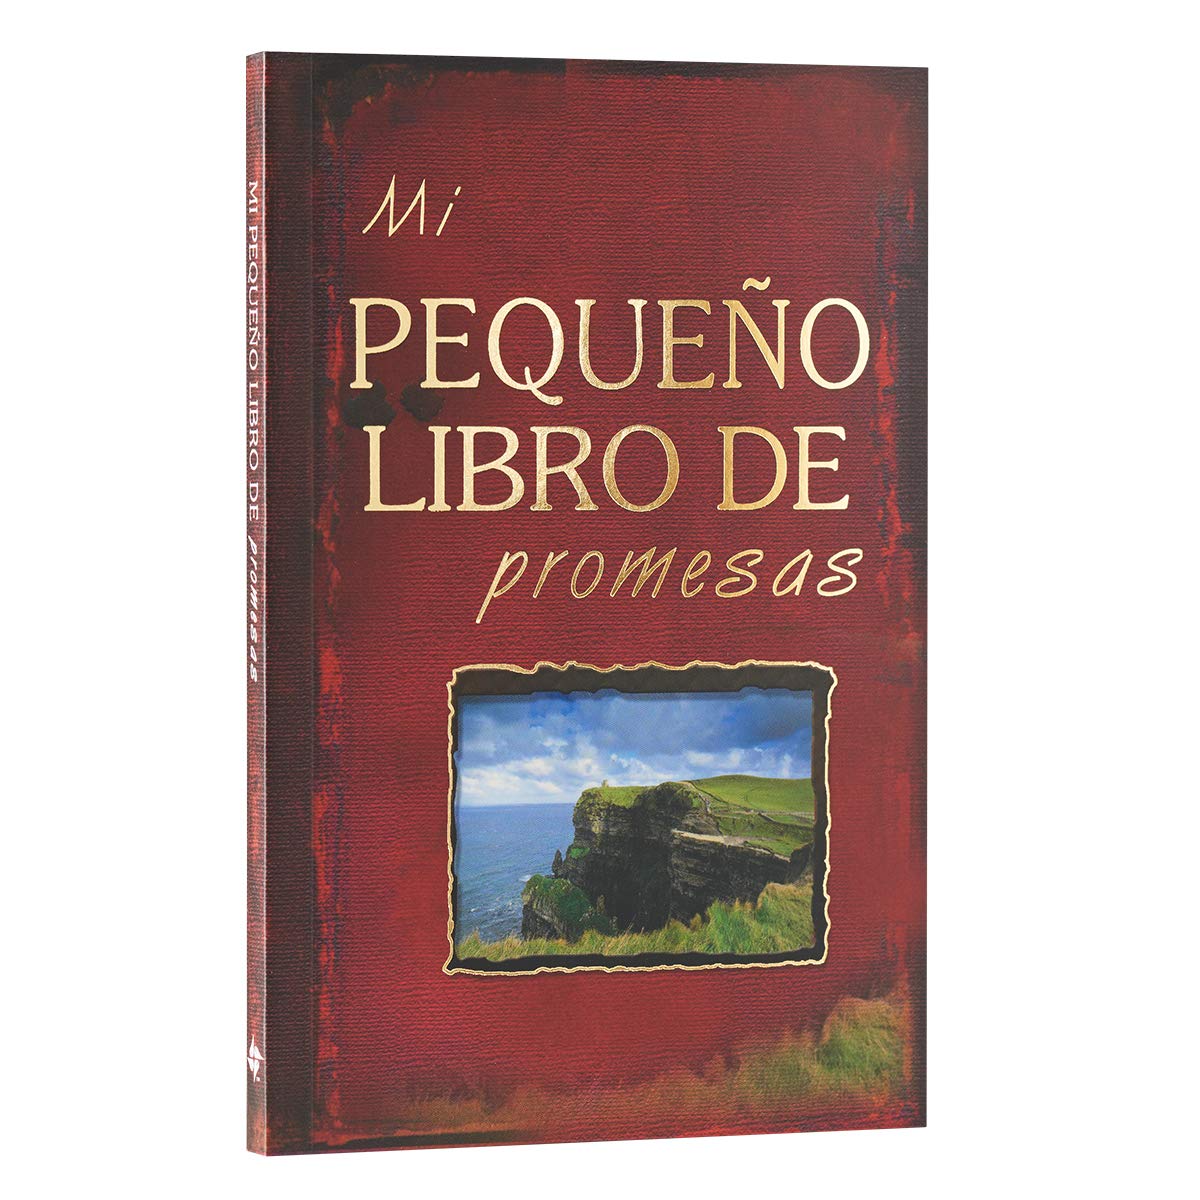 Mi pequeno libro de promesas